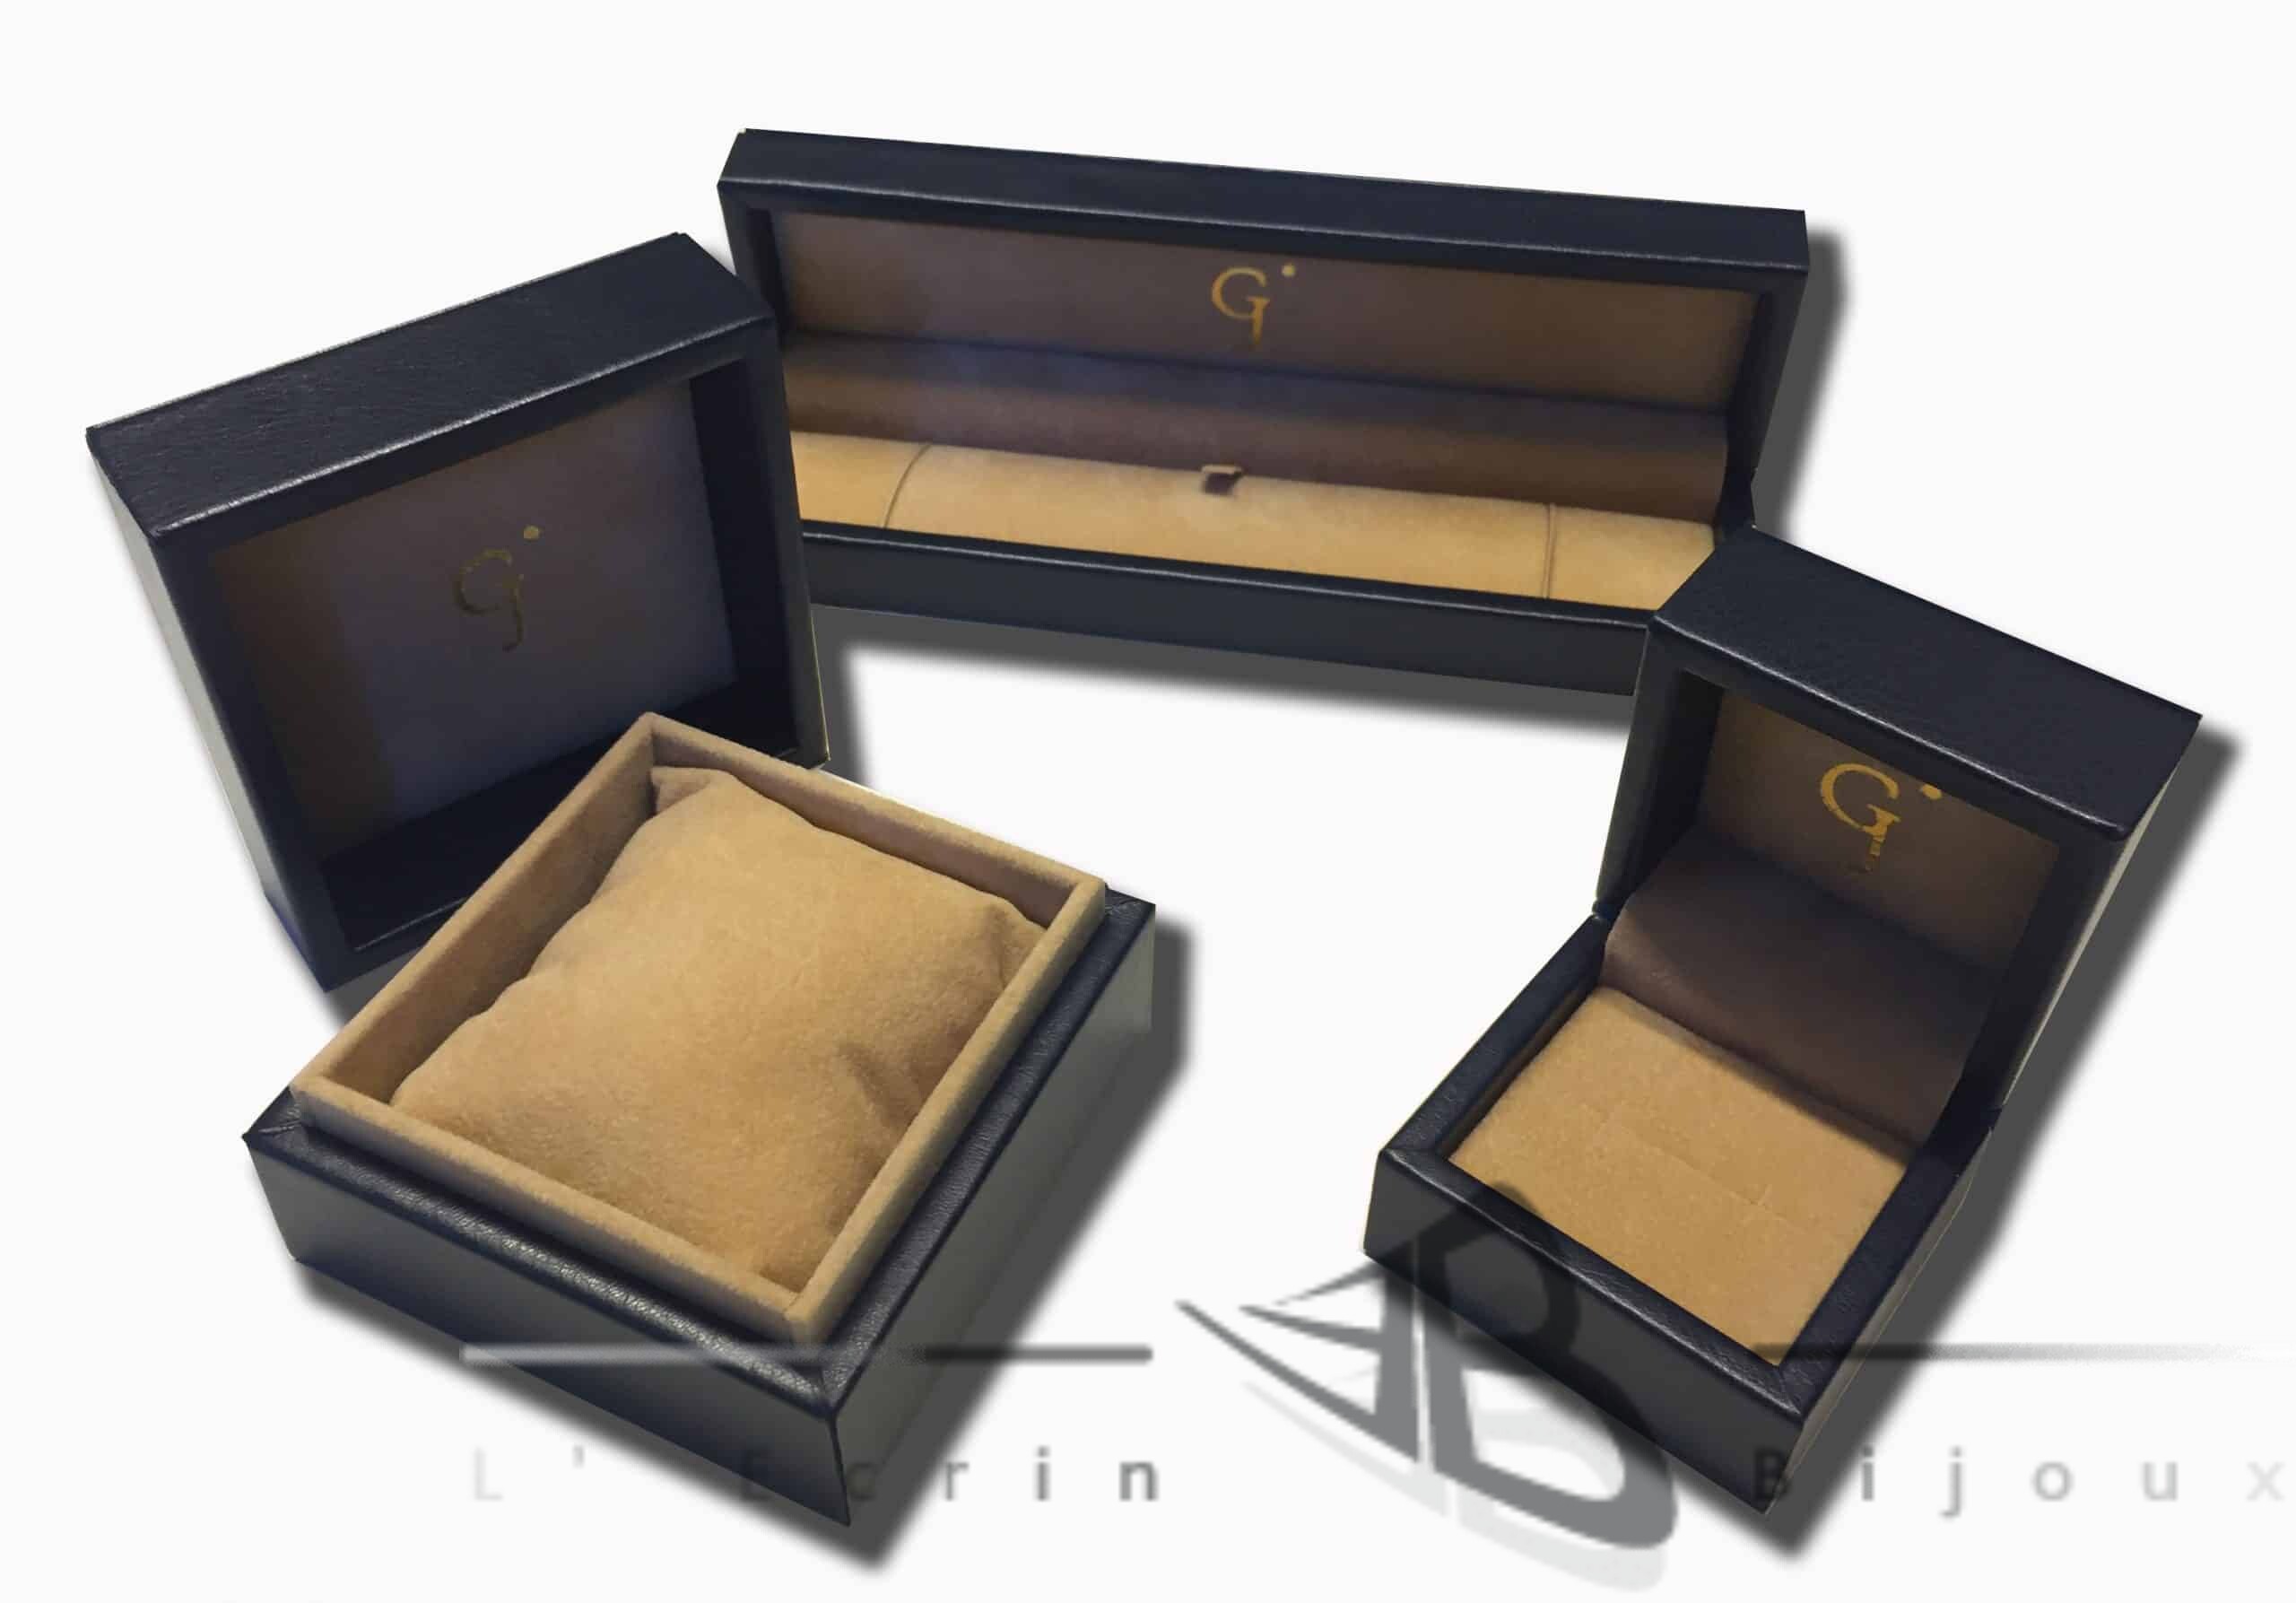 bespoke leather jewelry boxes